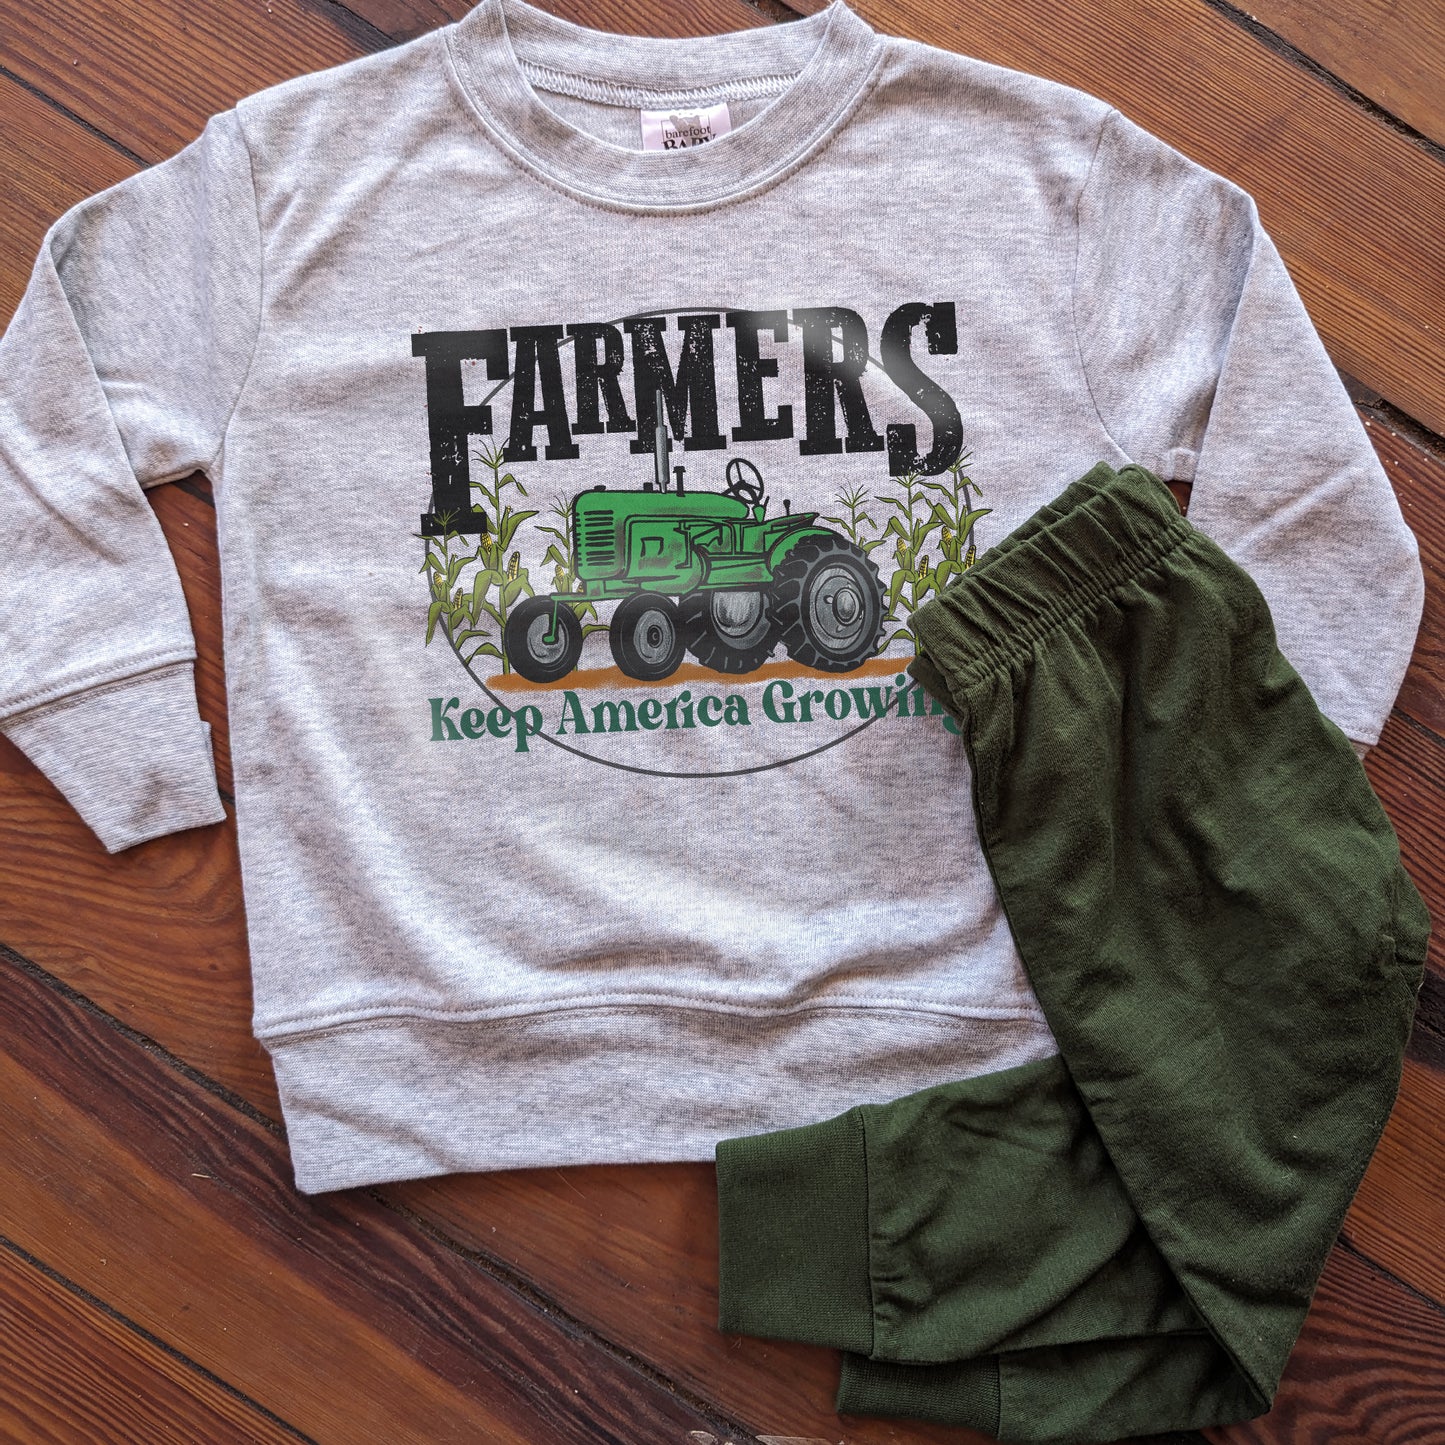 Green Tractor "Farmers keep America growing" Grey Long Sleeve